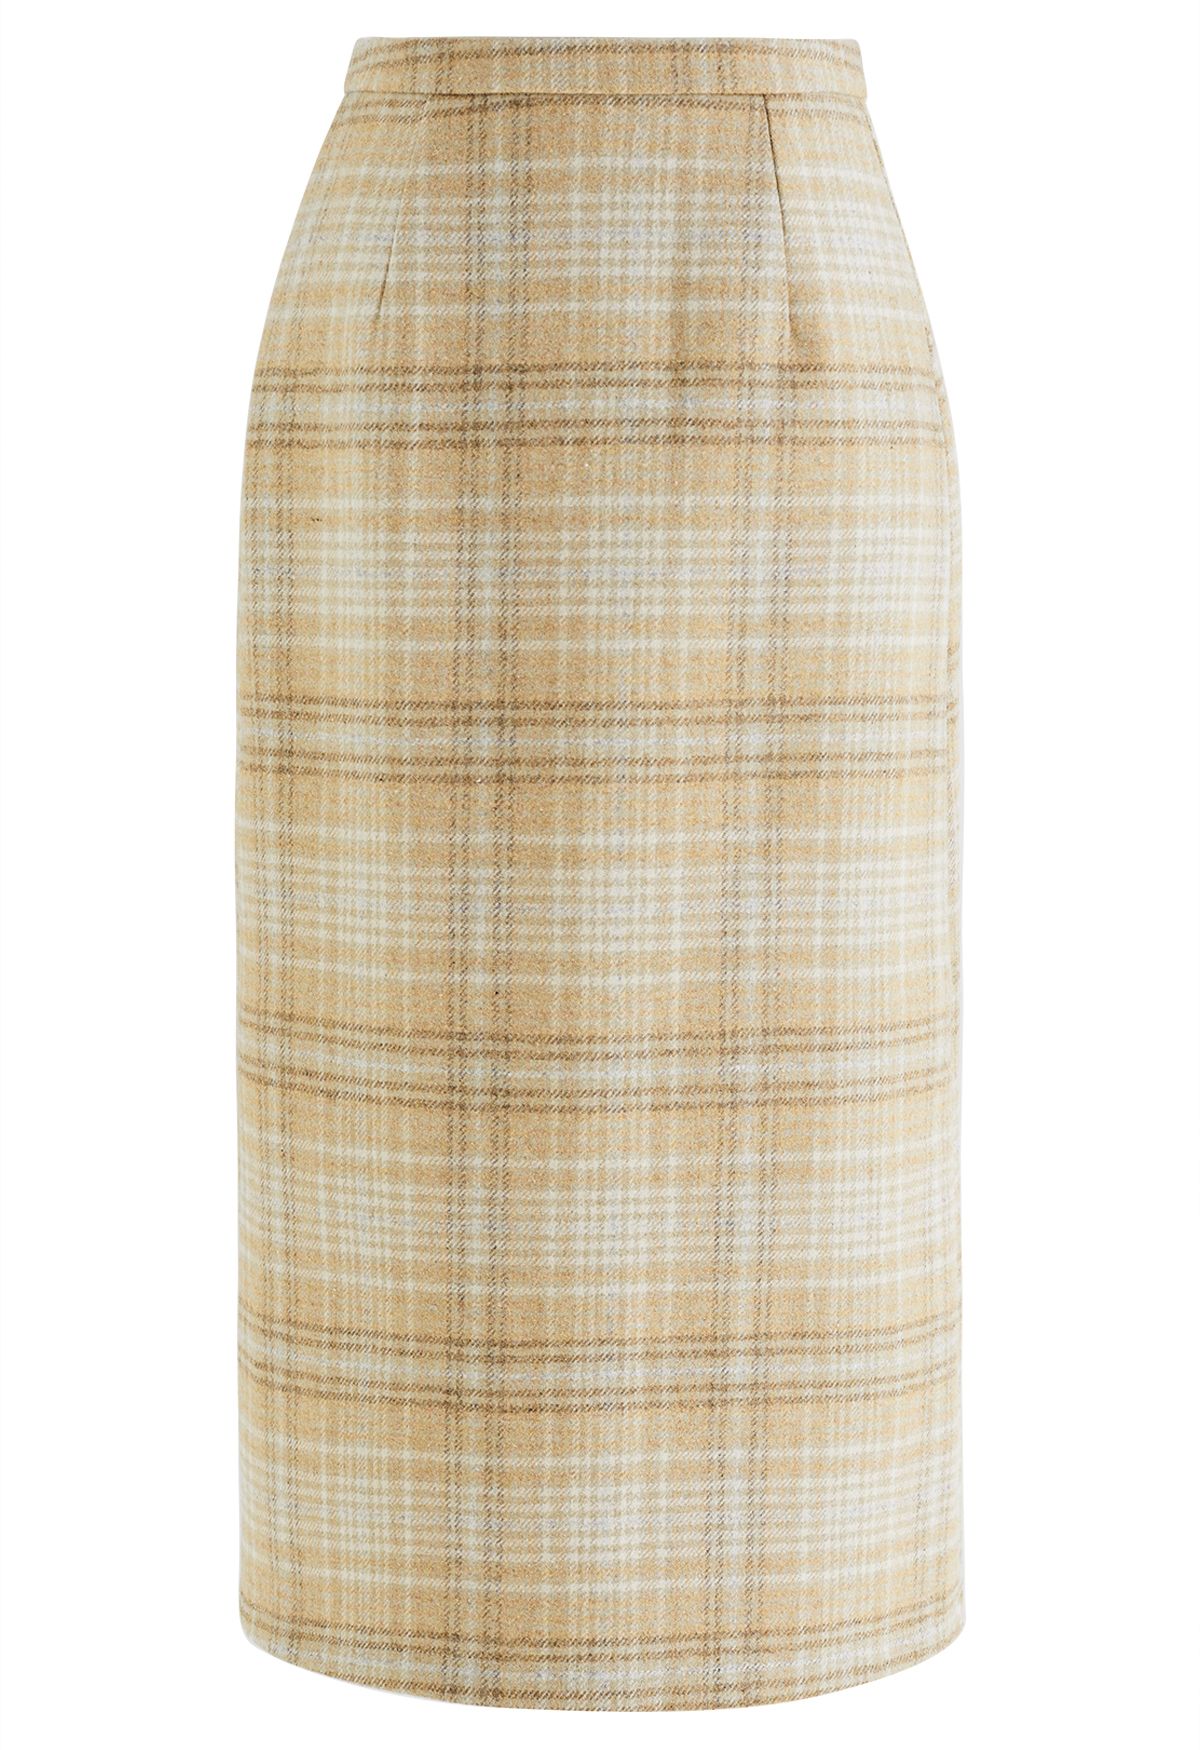 Snazzy Plaid Wool-Blend Pencil Midi Skirt